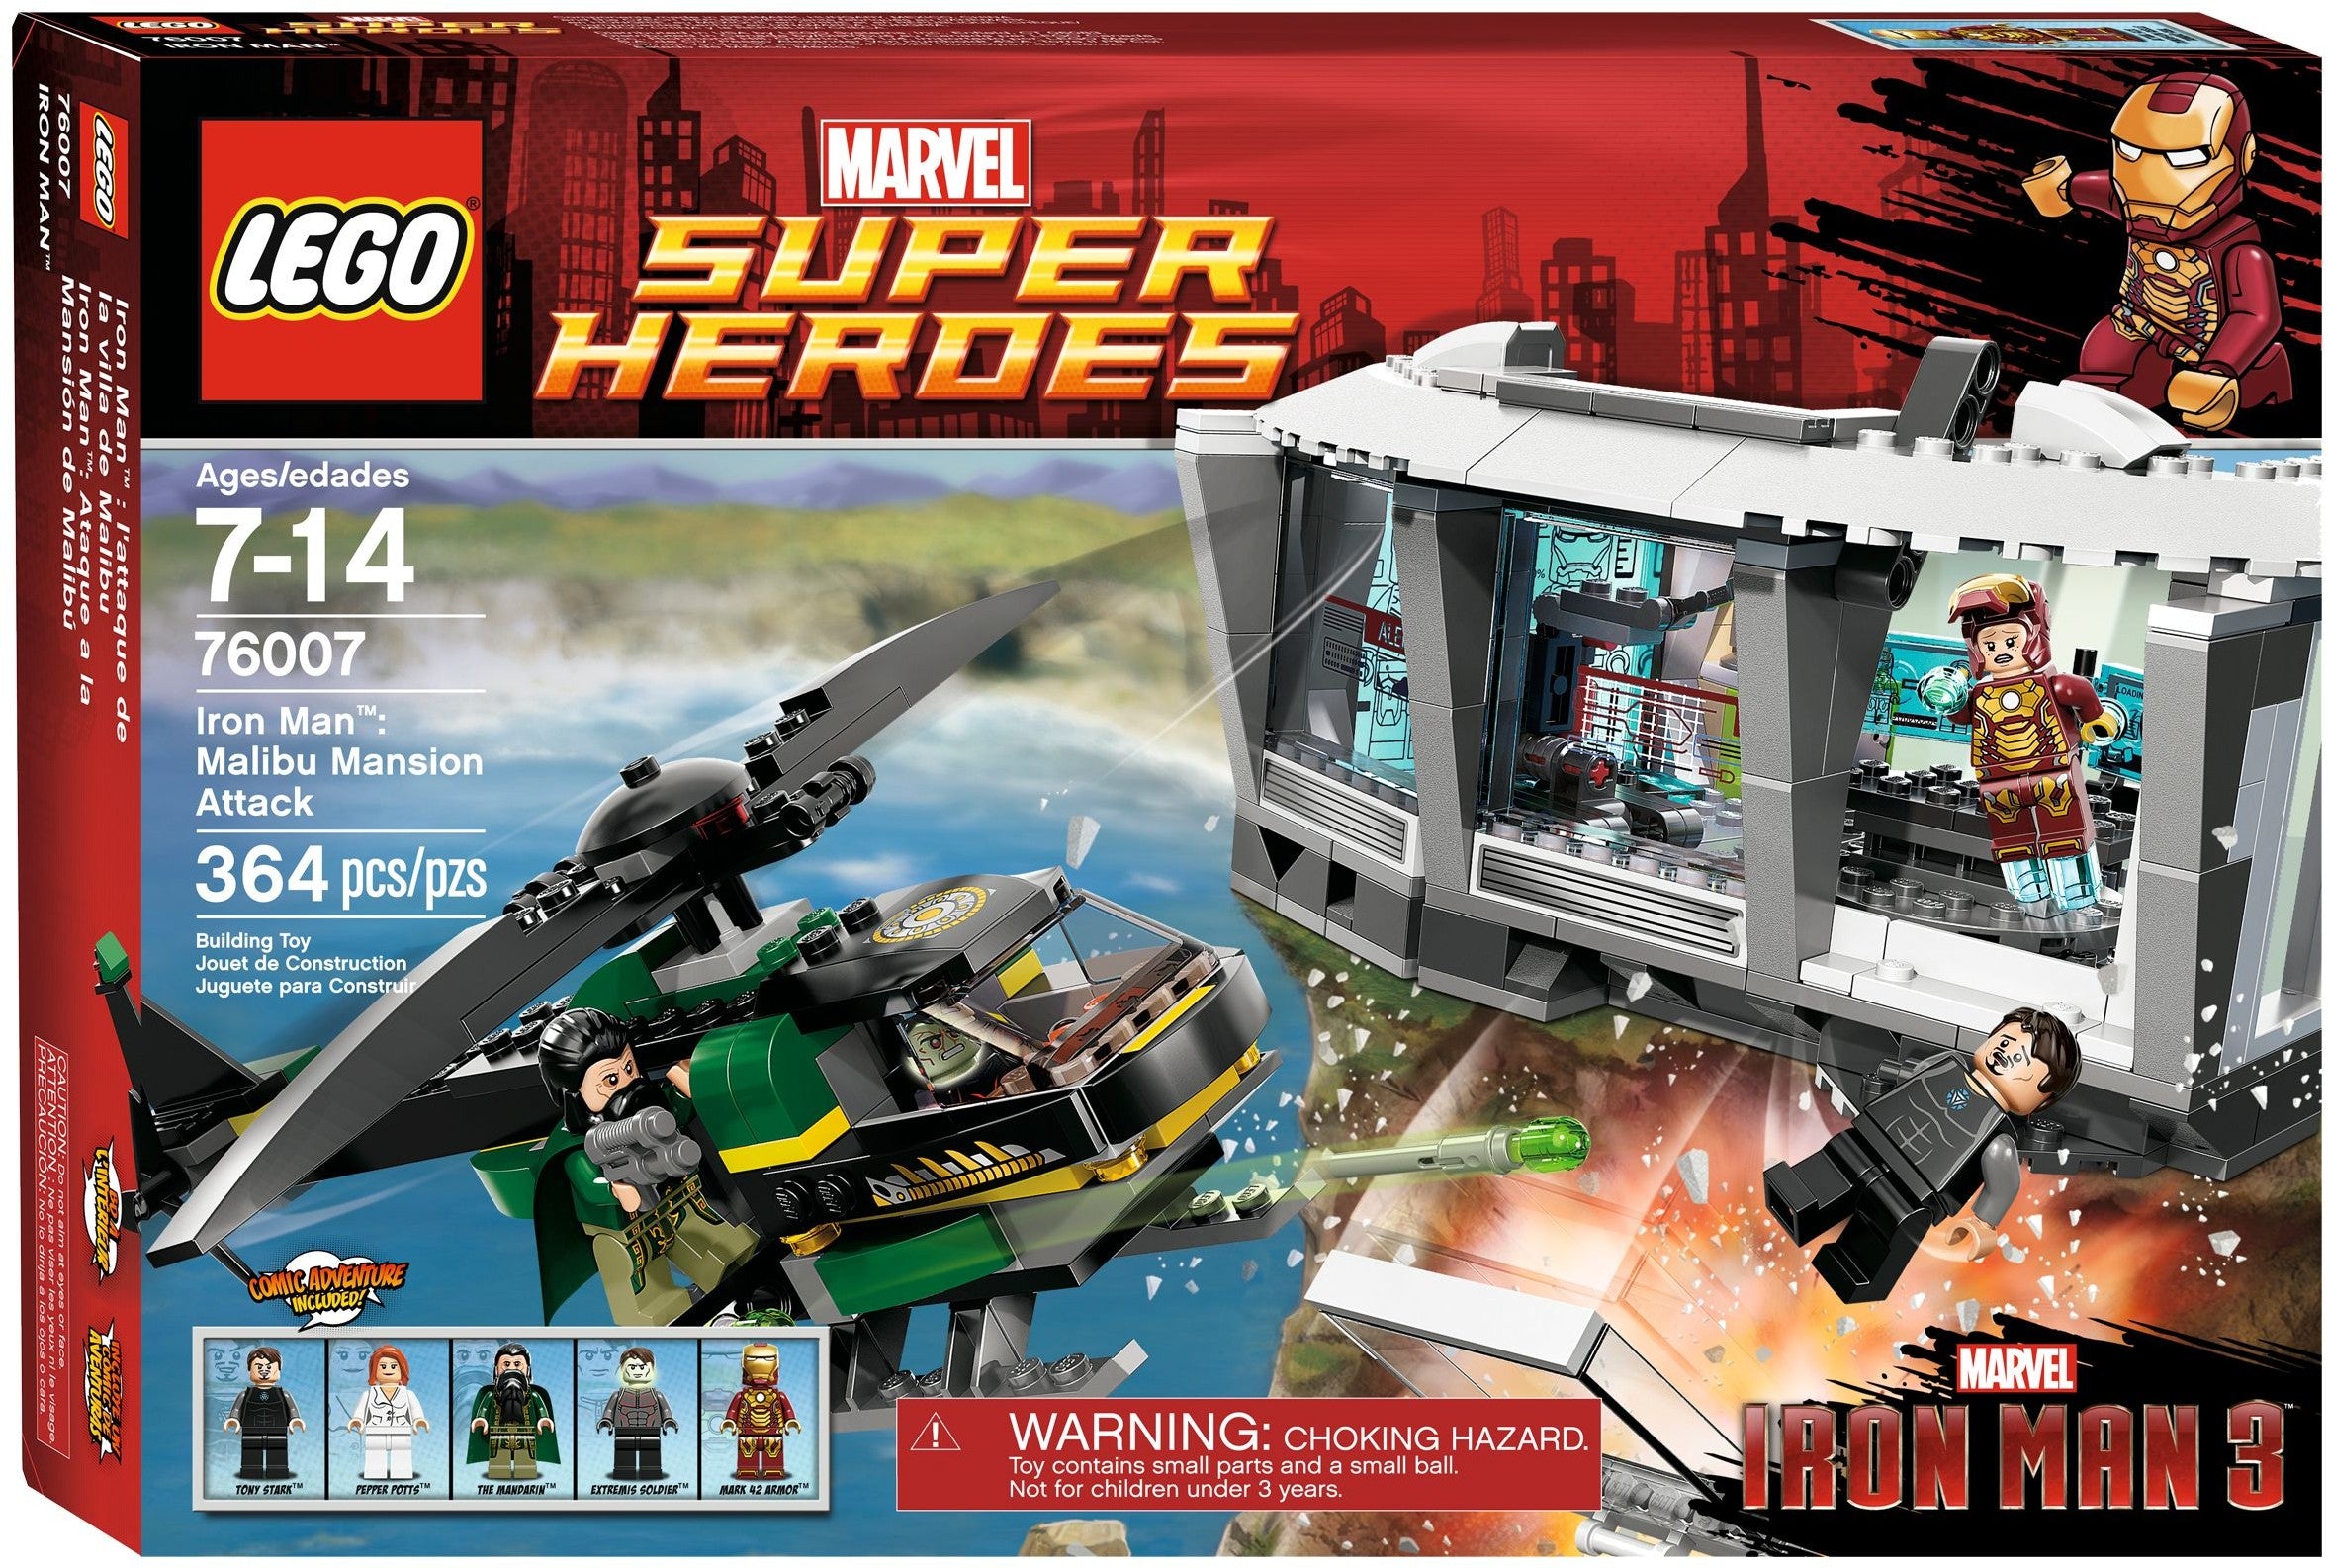 Lego Super Heroes 76007 - Iron Man: Malibu Mansion Attack